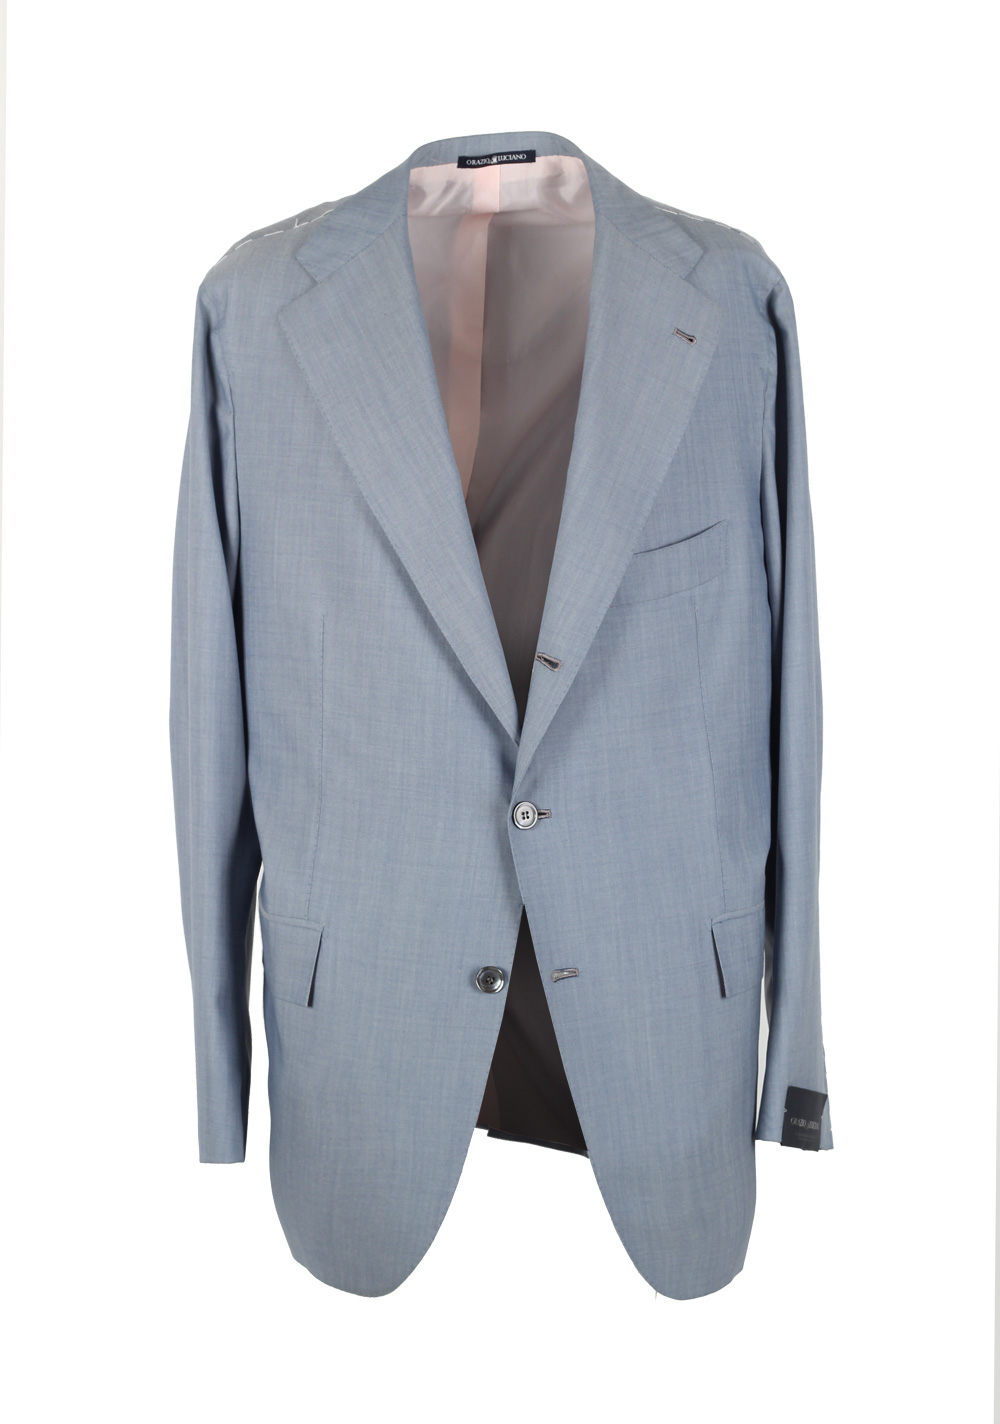 Orazio Luciano La Vera Baby Blui Suit Size 54 / 44R U.S. | Costume Limité